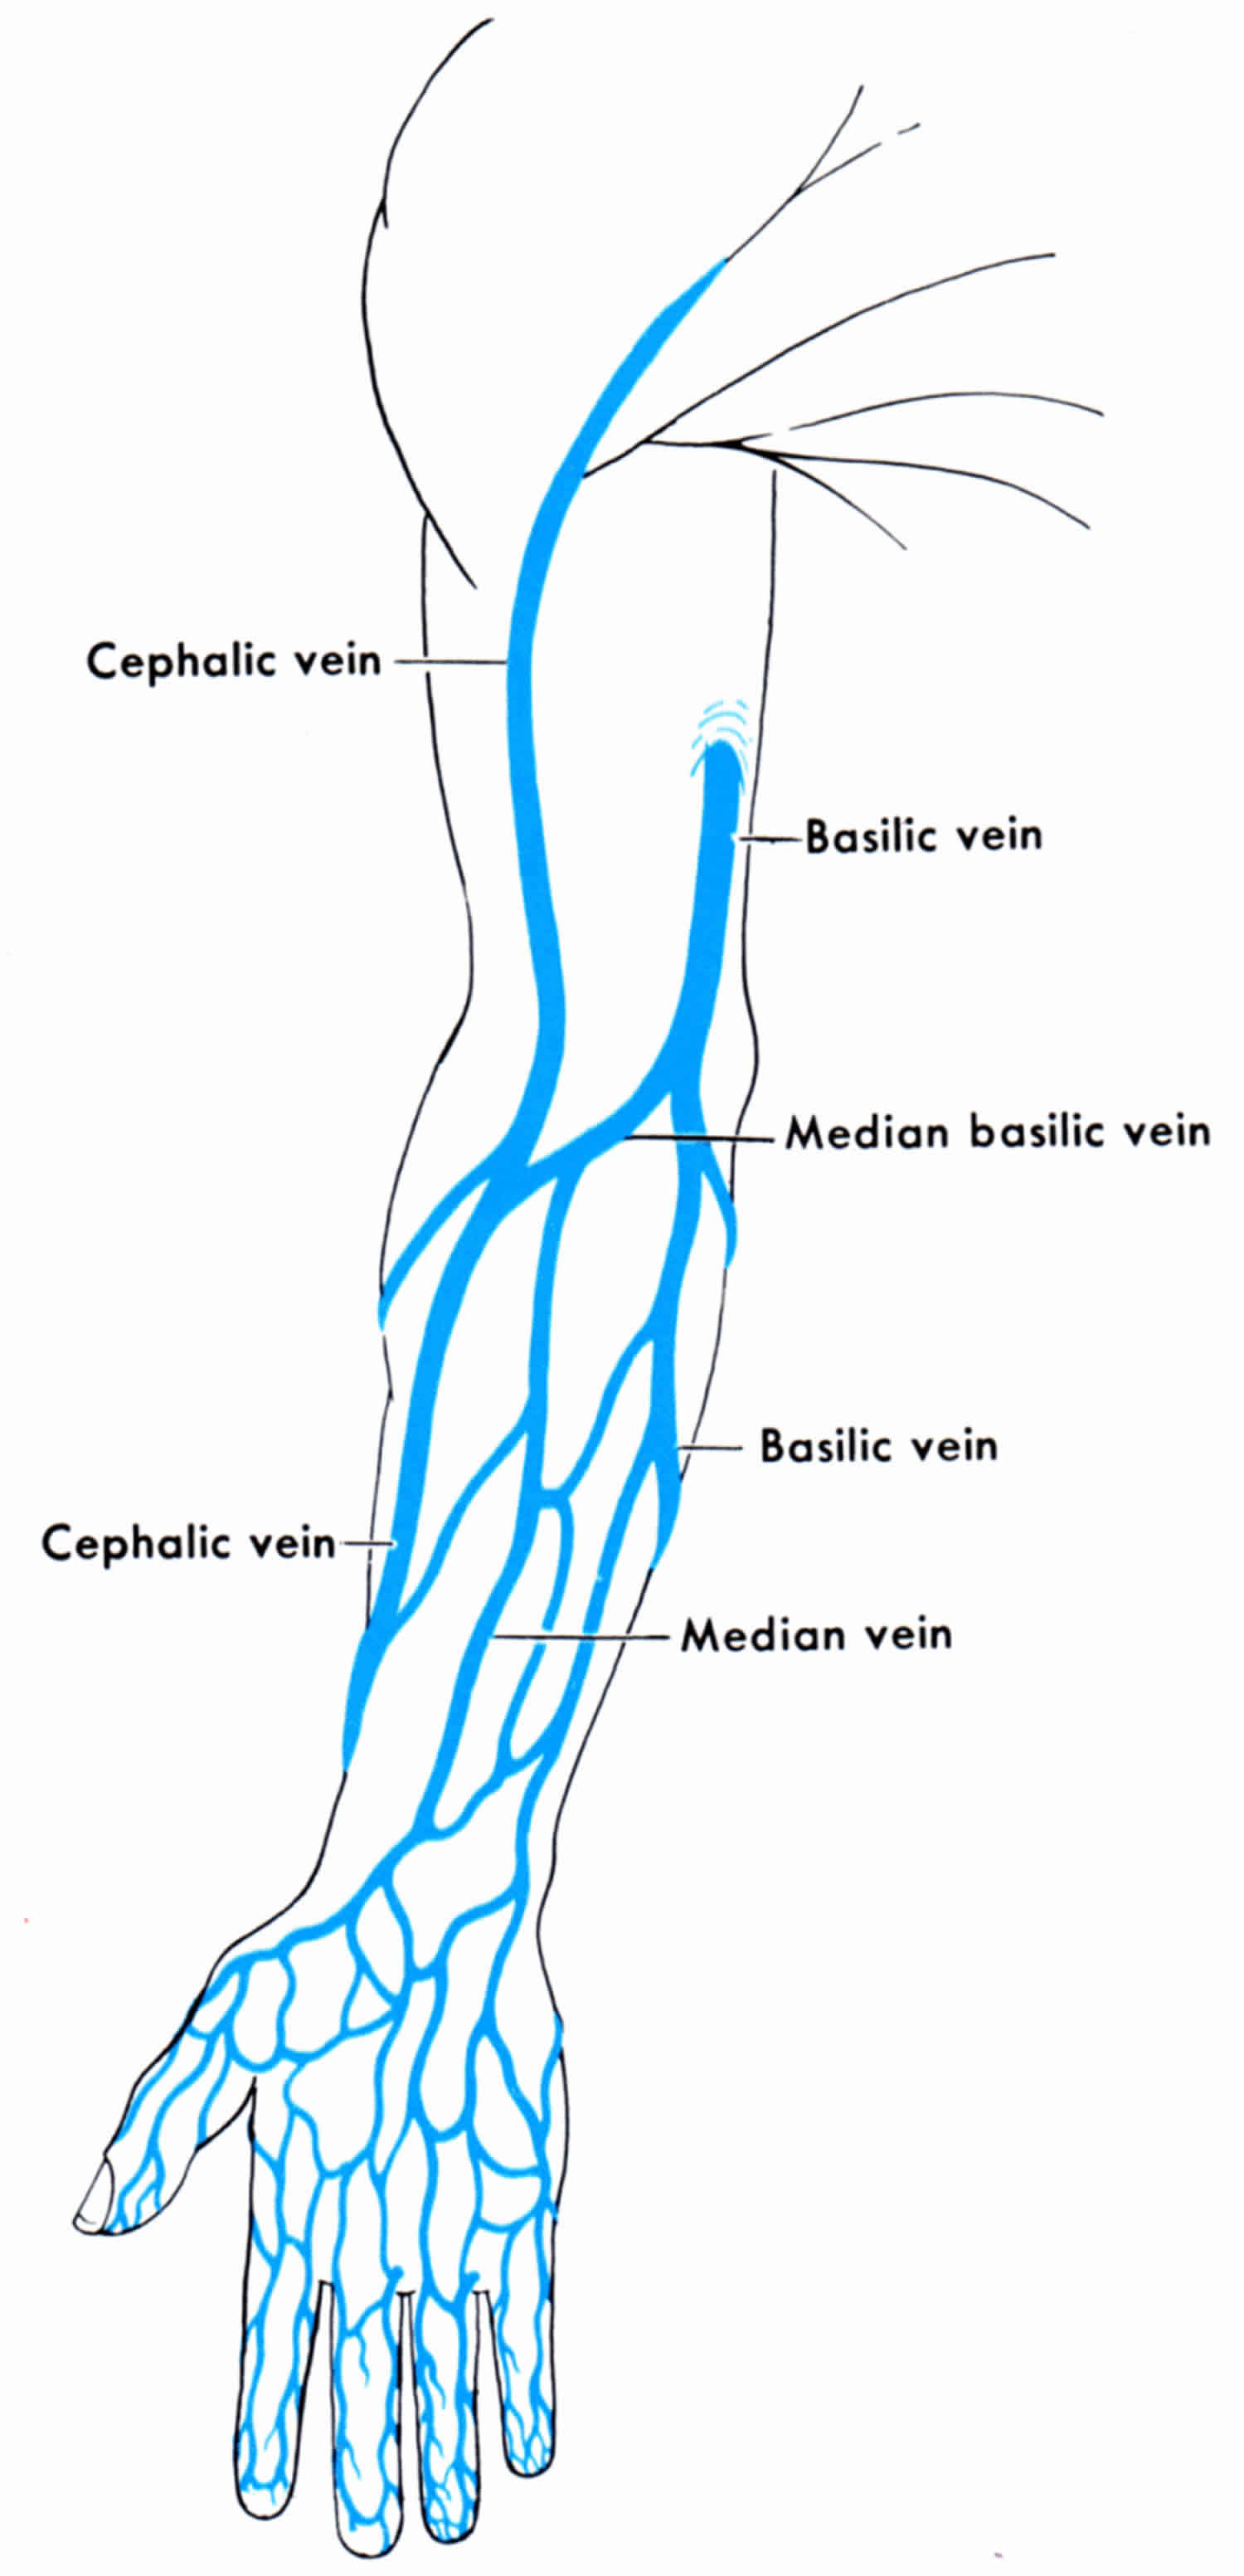 venipuncture-procedure-venipuncture-sites-veins-venipuncture